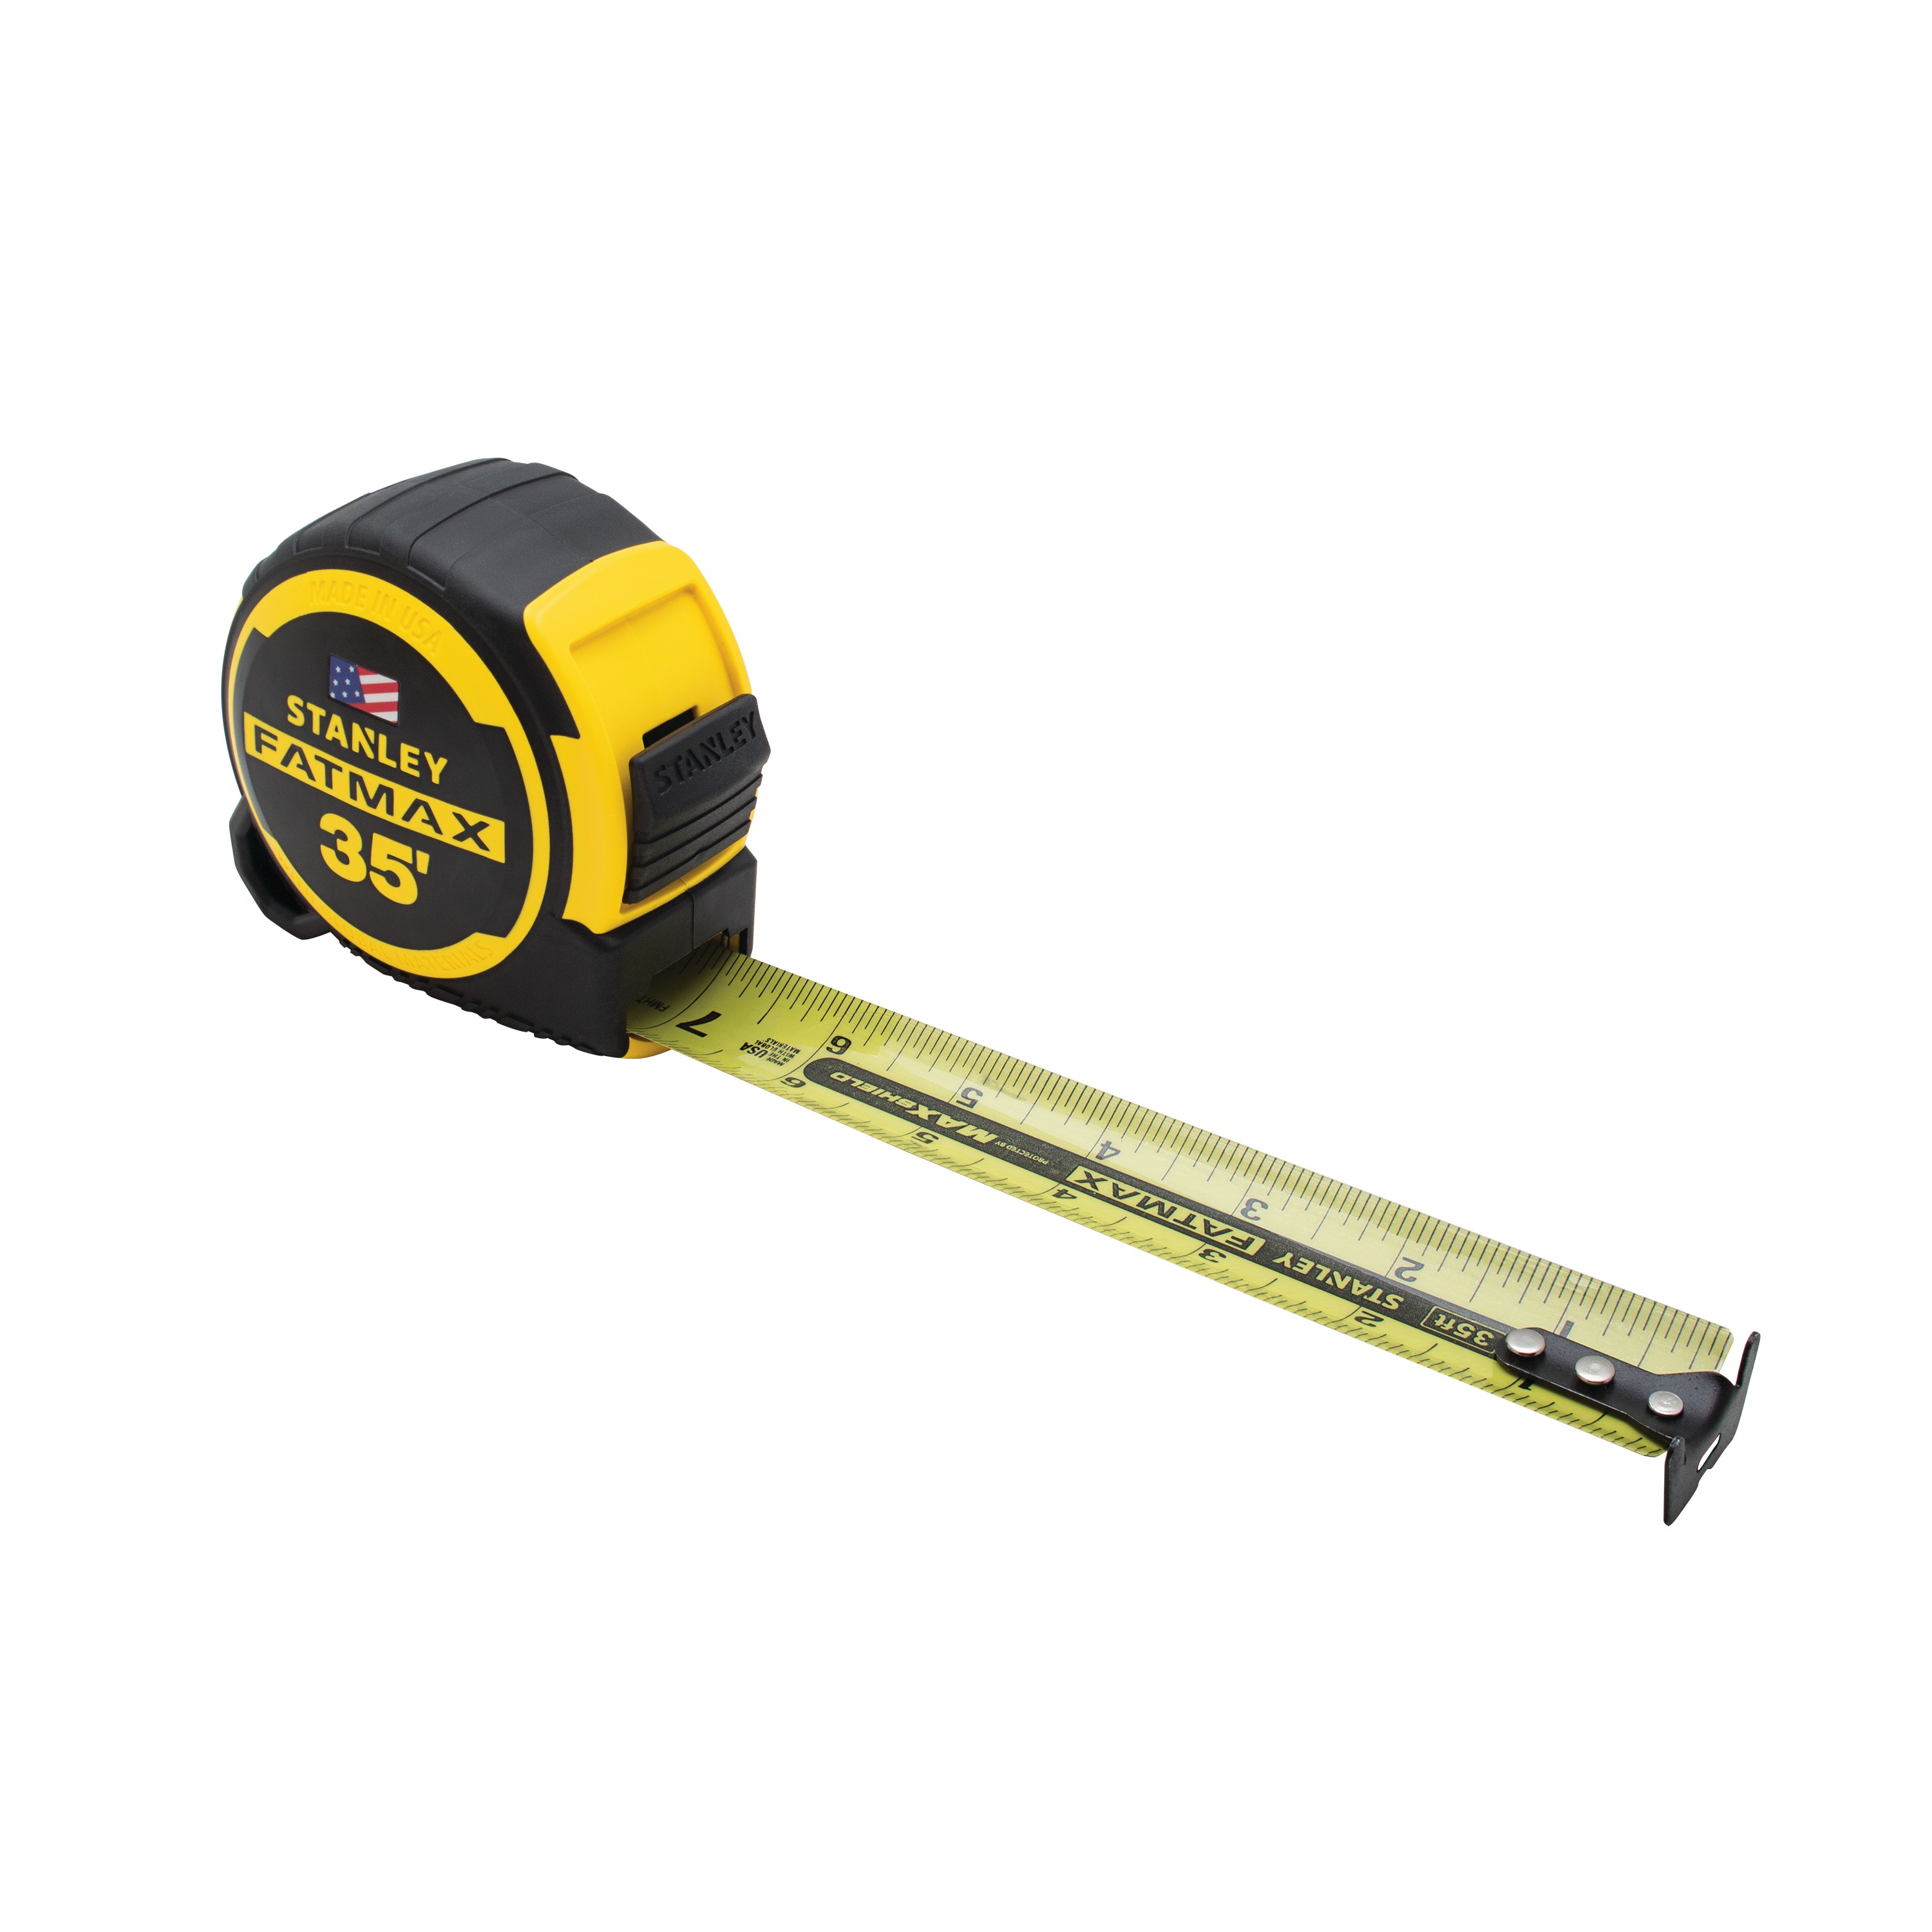 Stanley Tools - 35 ft FATMAX Tape Measure - FMHT36335S